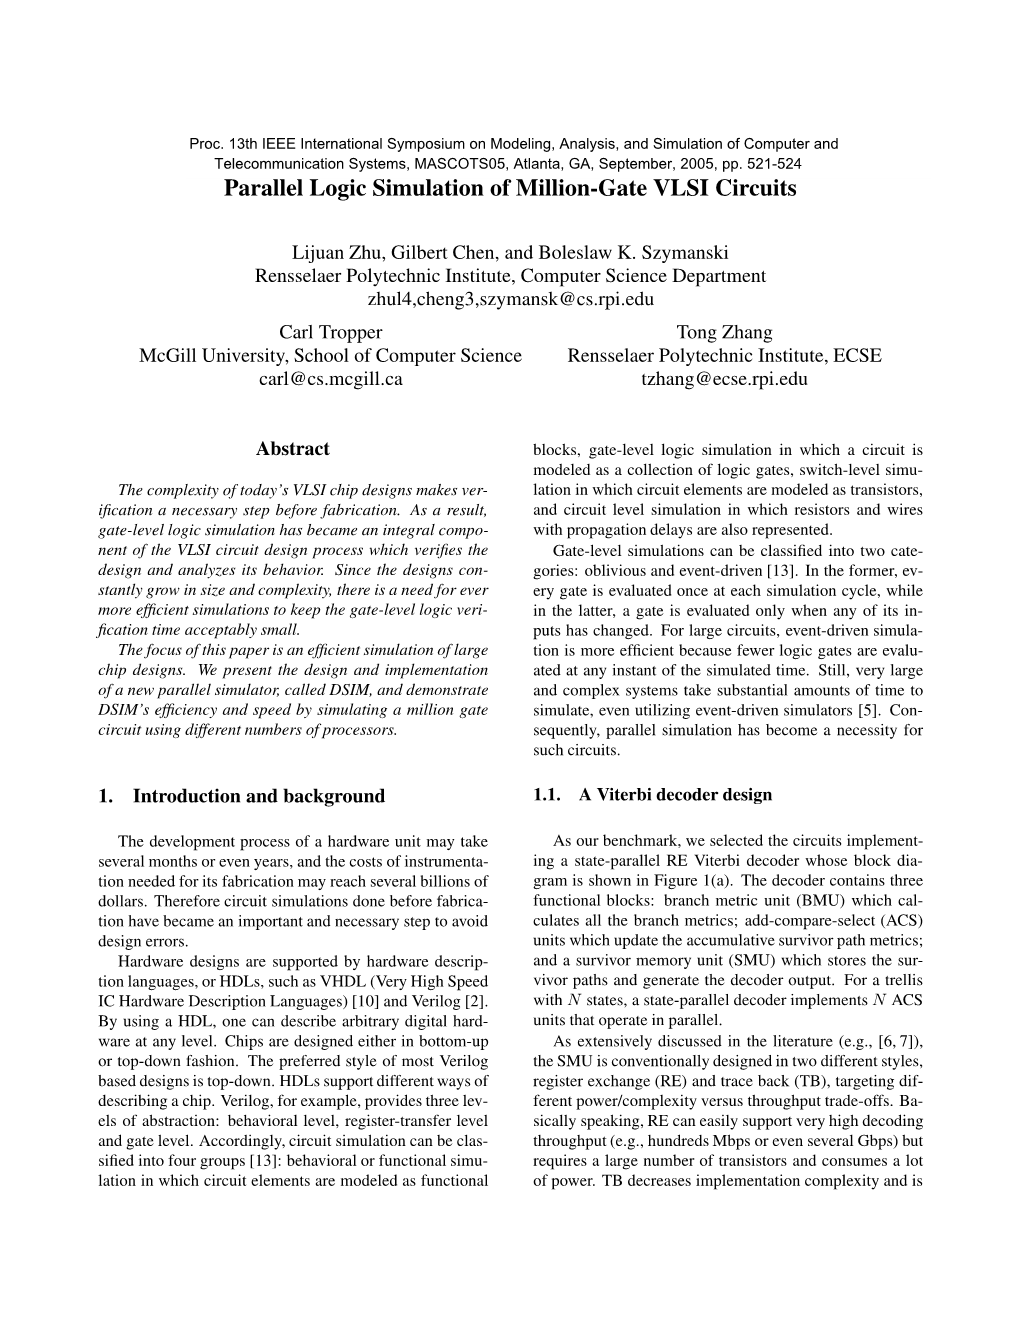 Parallel Logic Simulation of Million-Gate VLSI Circuits